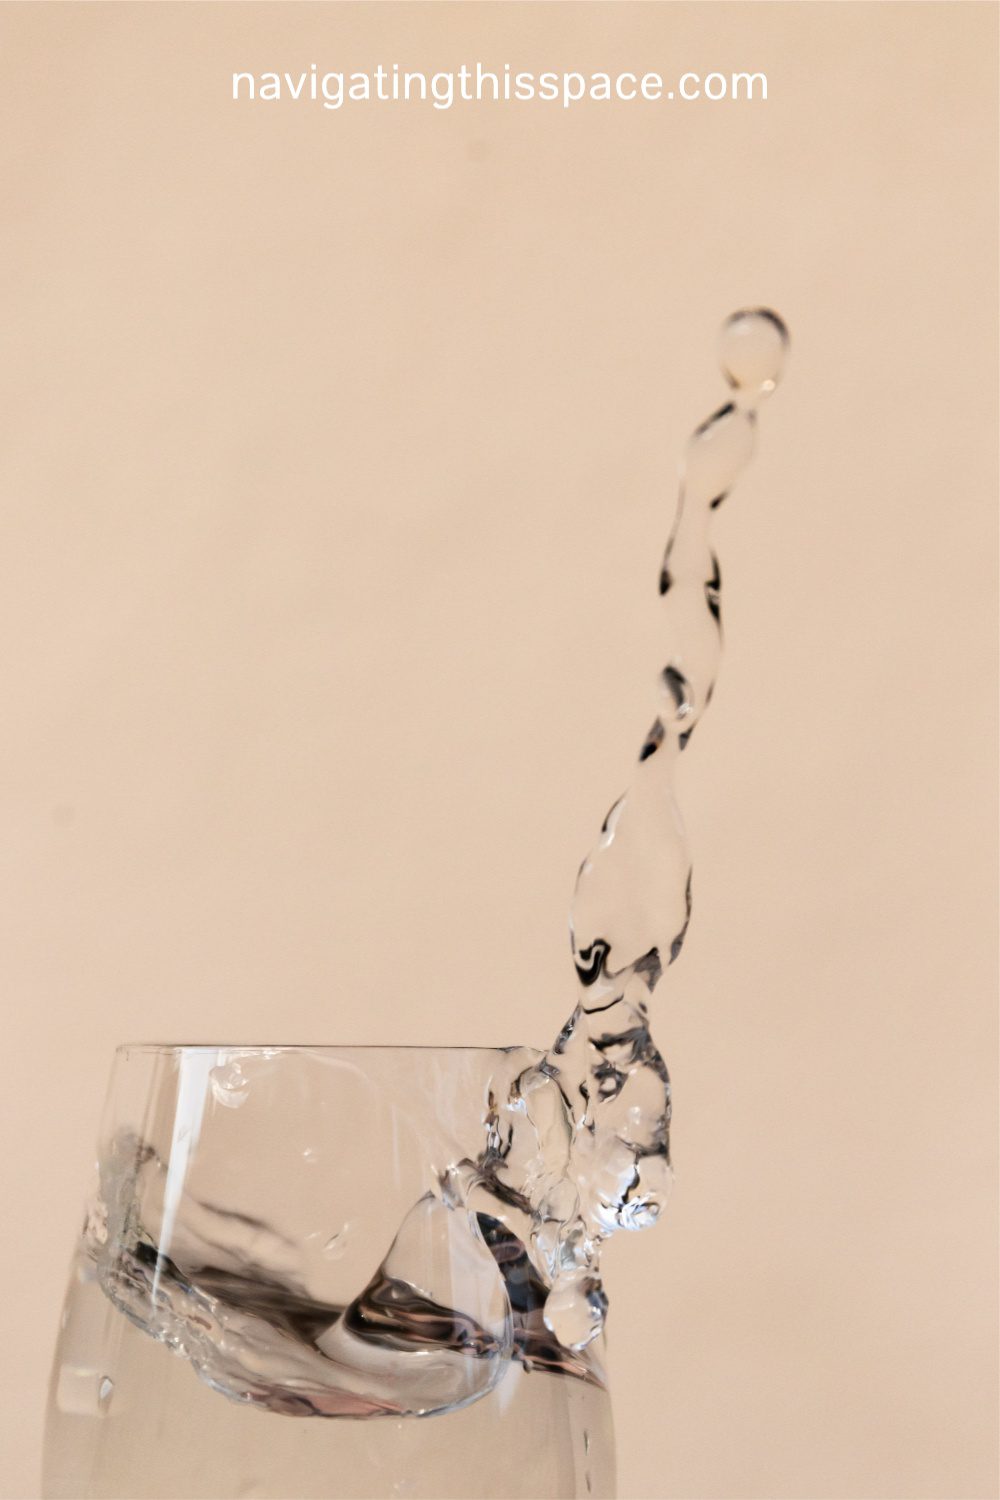 water splashing in a drinking glass